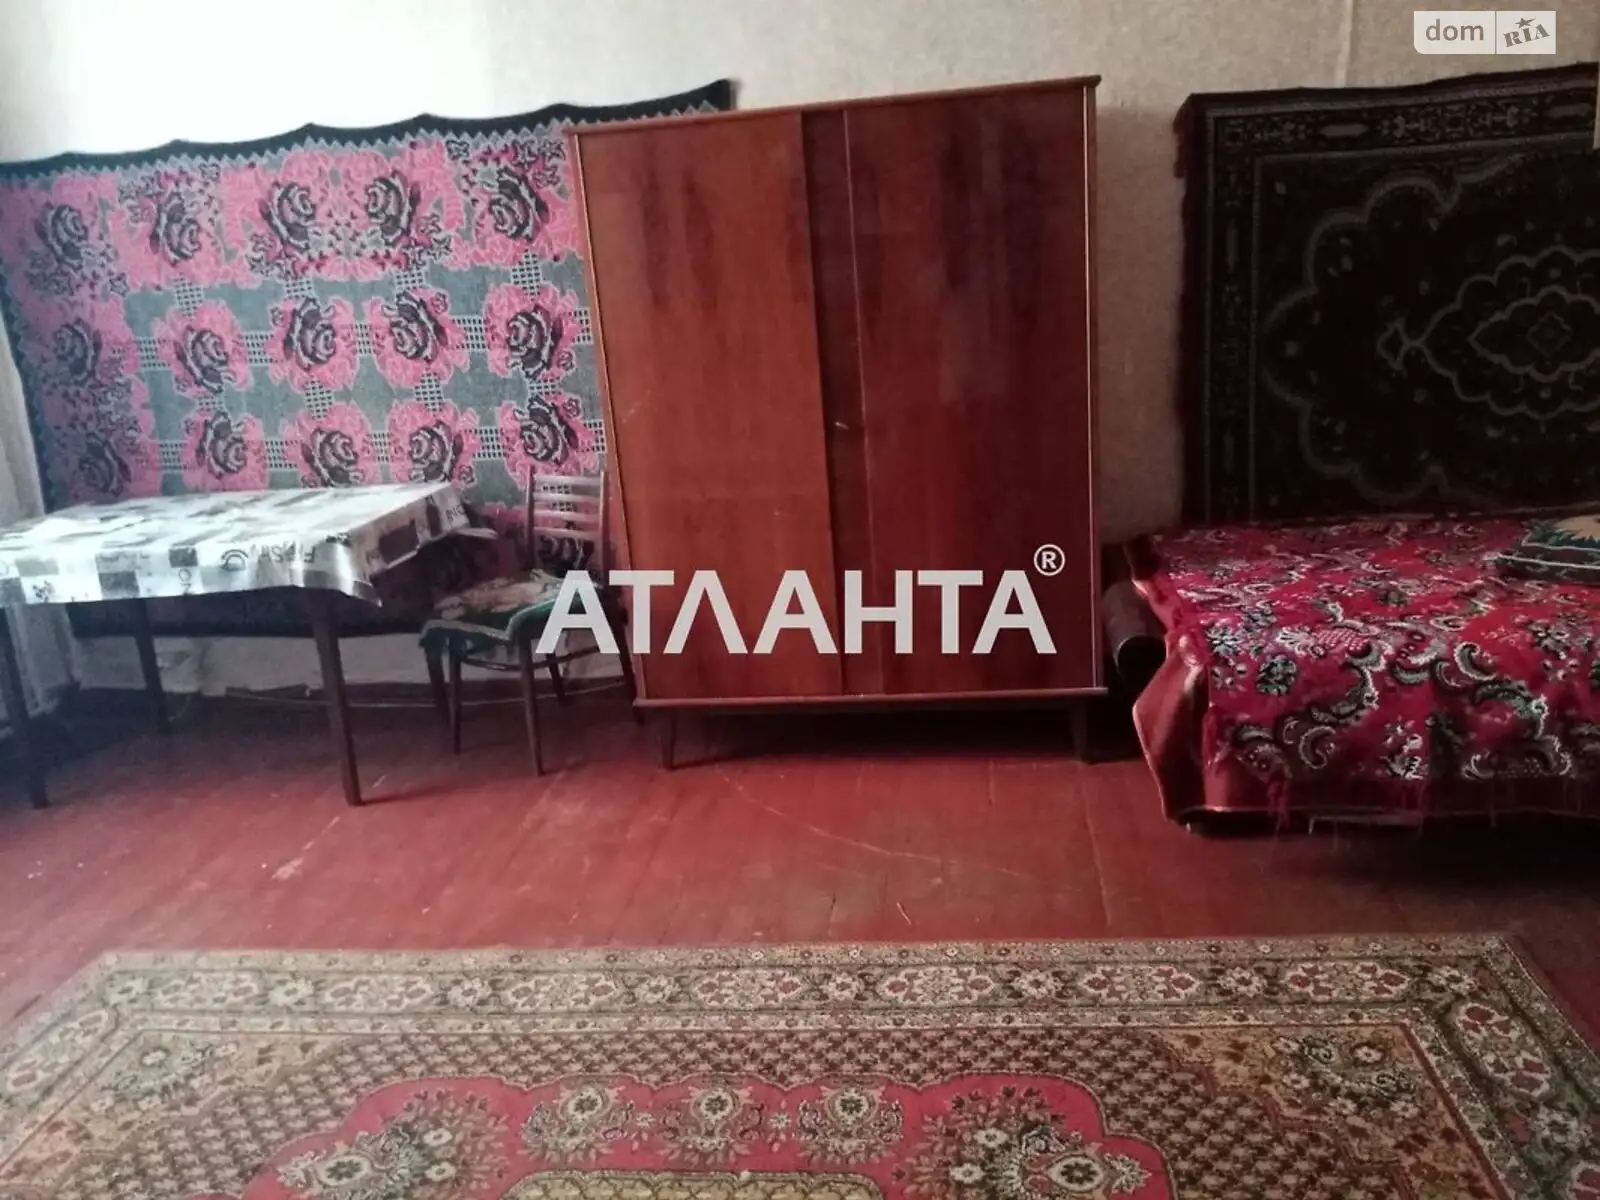 Продается комната 35.1 кв. м в Одессе, цена: 18000 $ - фото 1